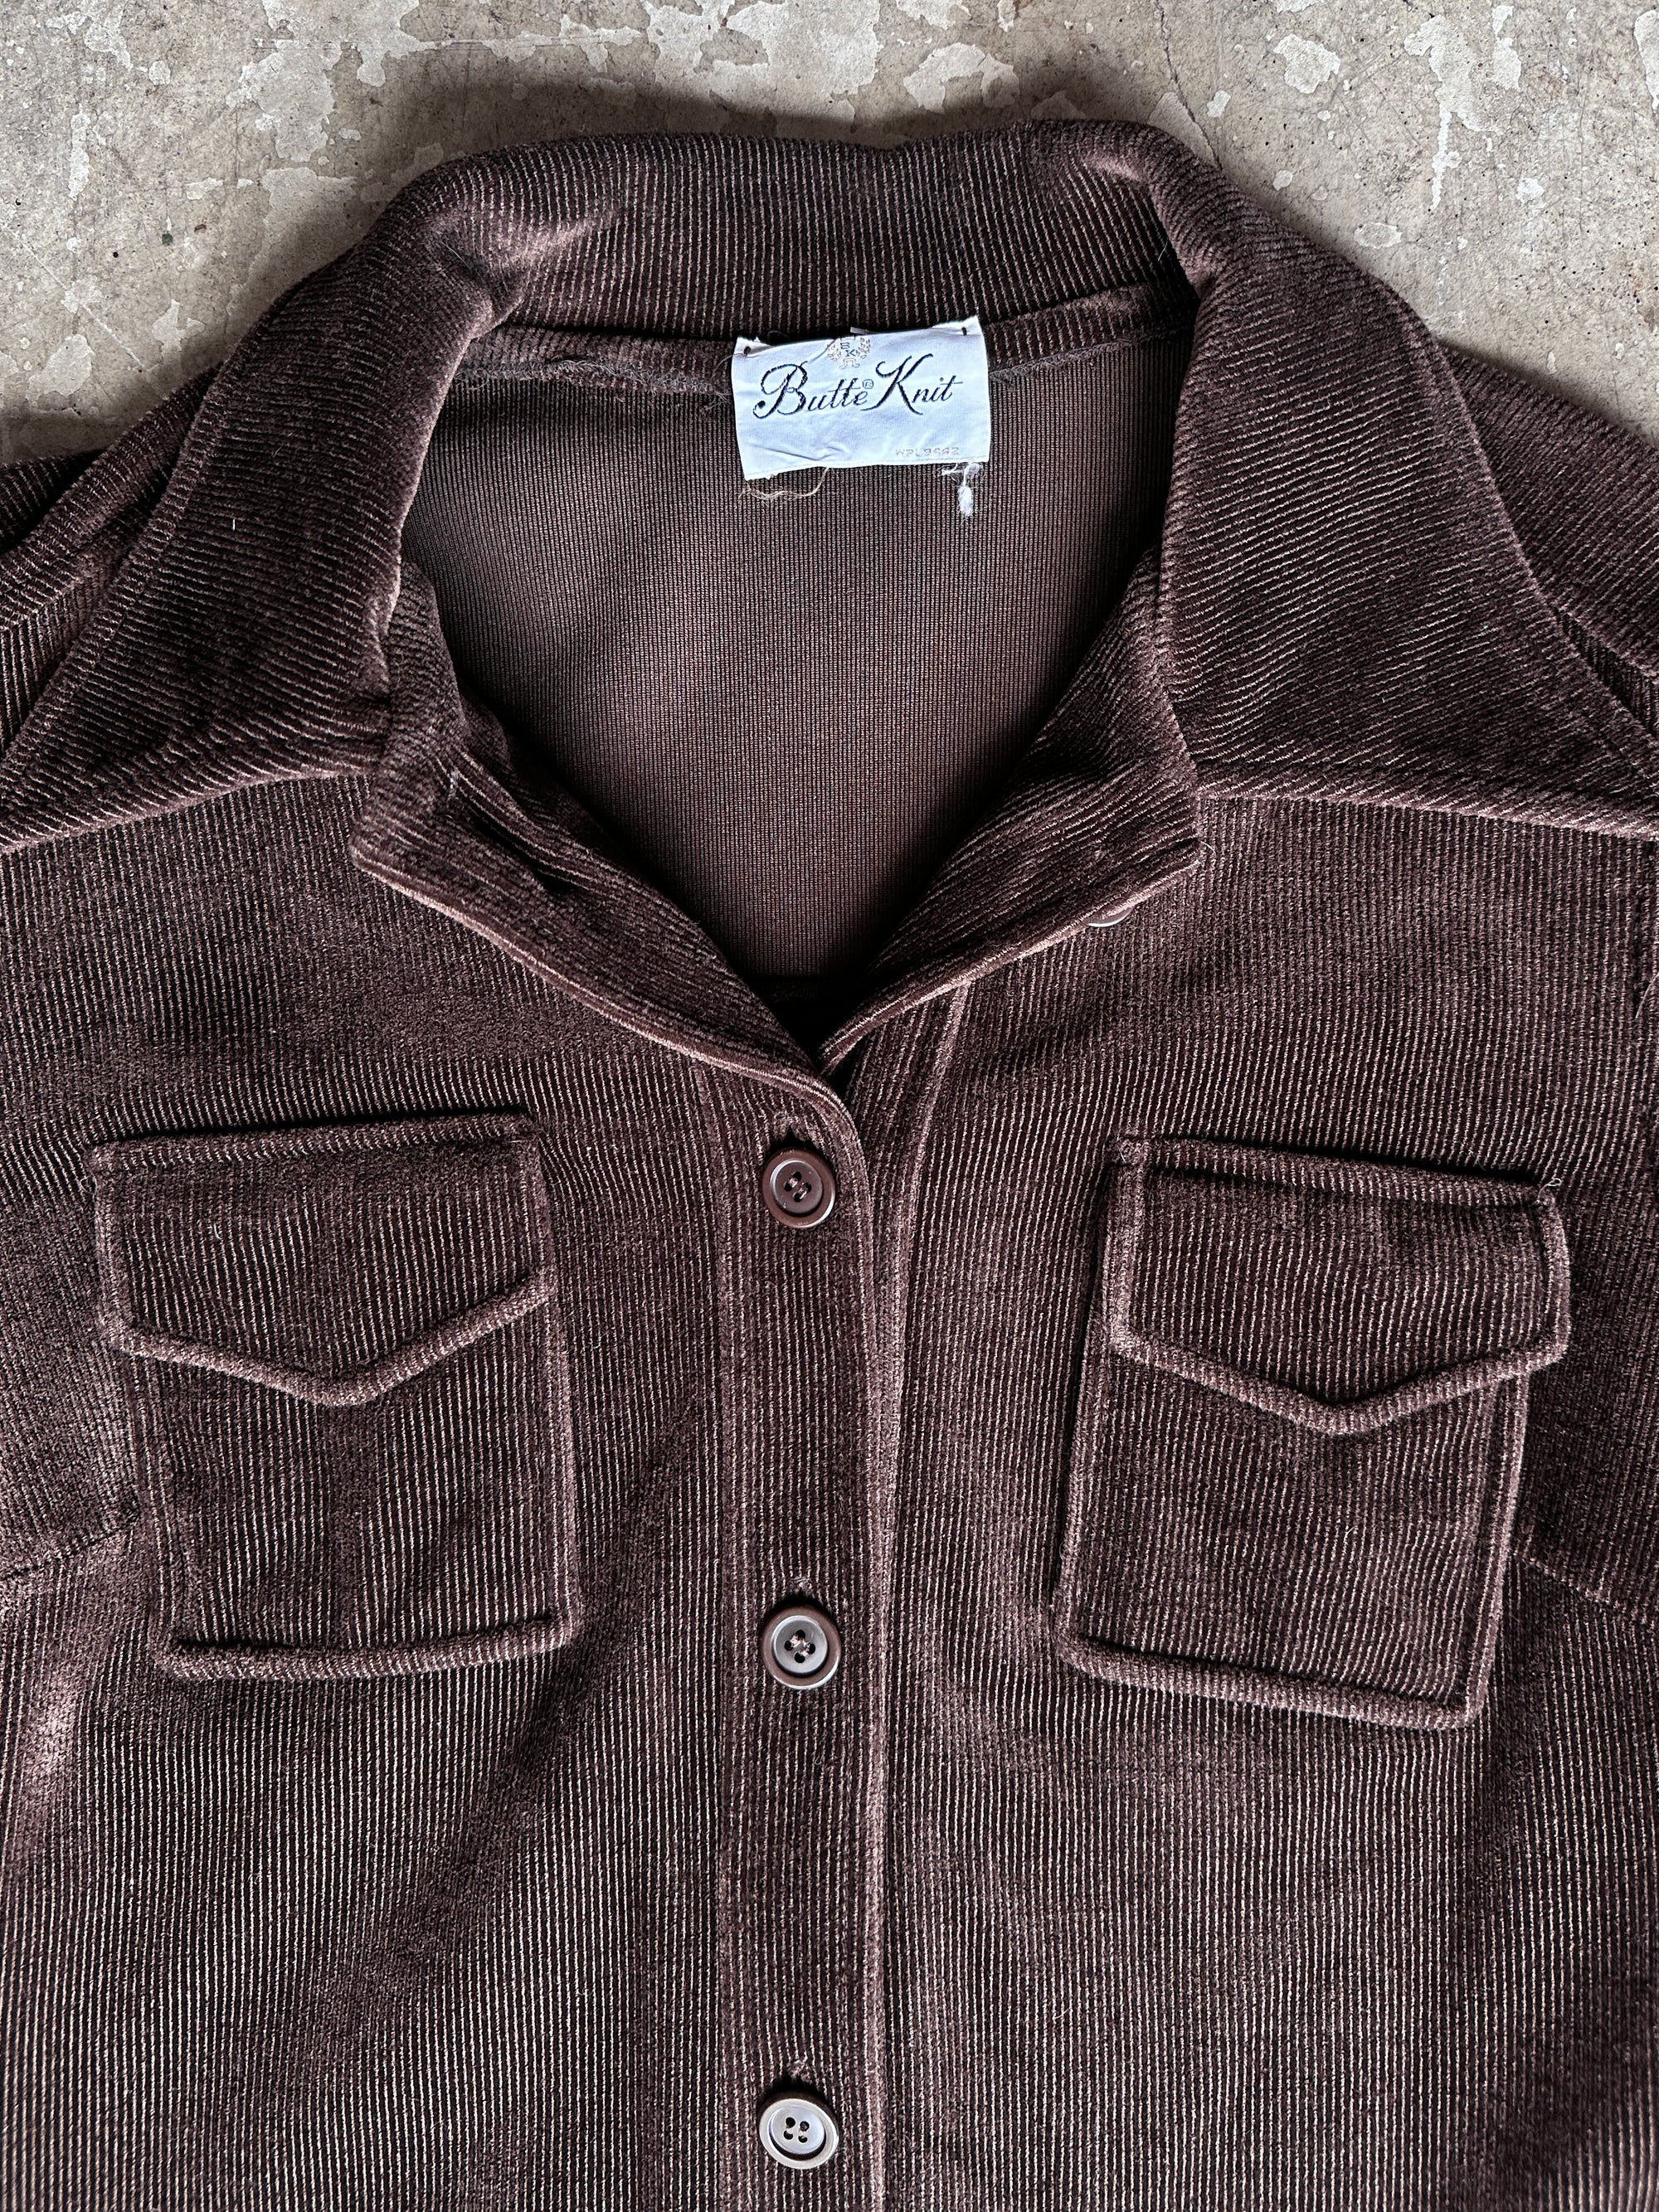 1970s Brown Corduroy Shirt Jacket